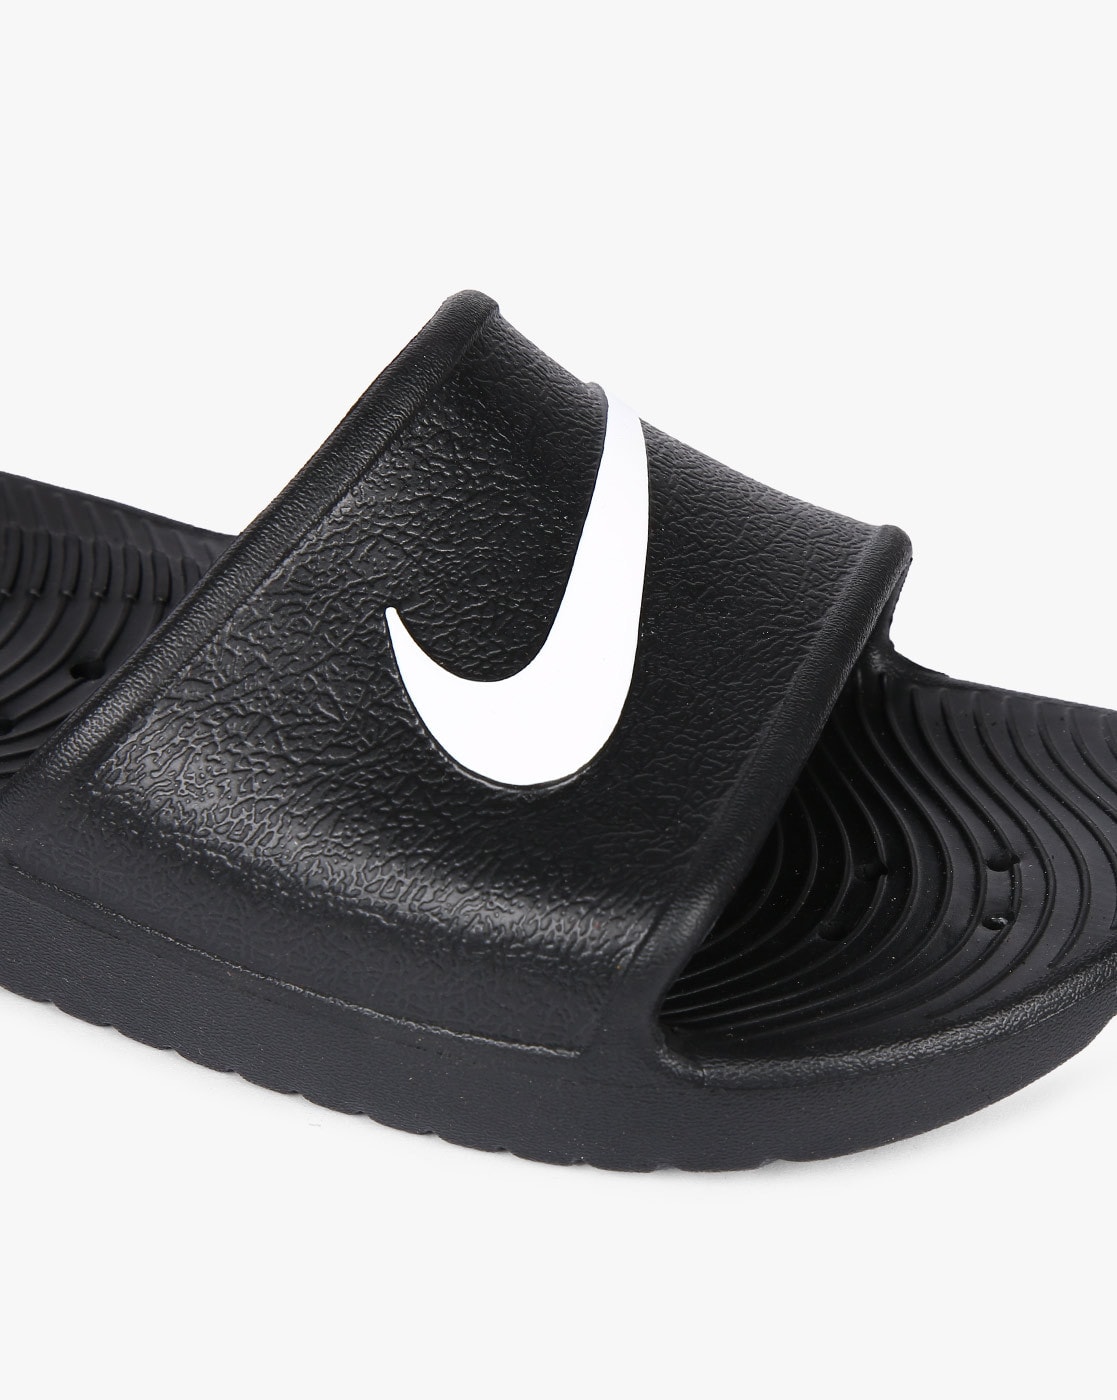 Infant Nike Flip Flops Offers Discounts, Save 40% | idiomas.to.senac.br